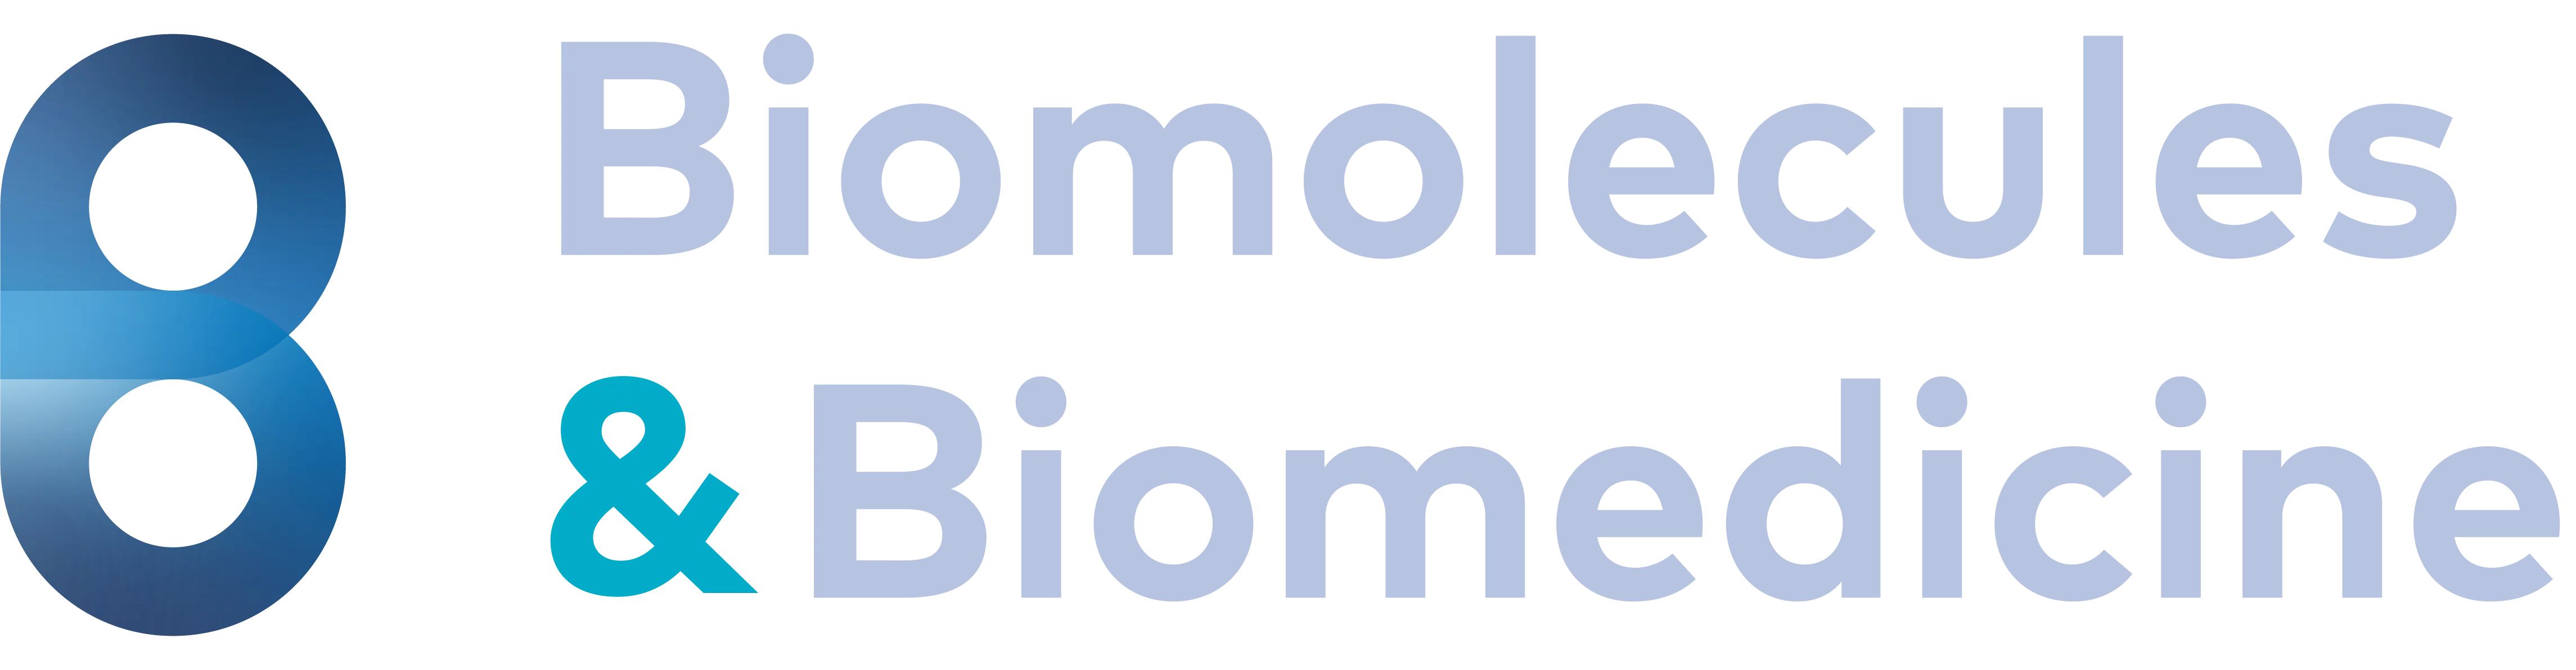 Biomol Biomed logo